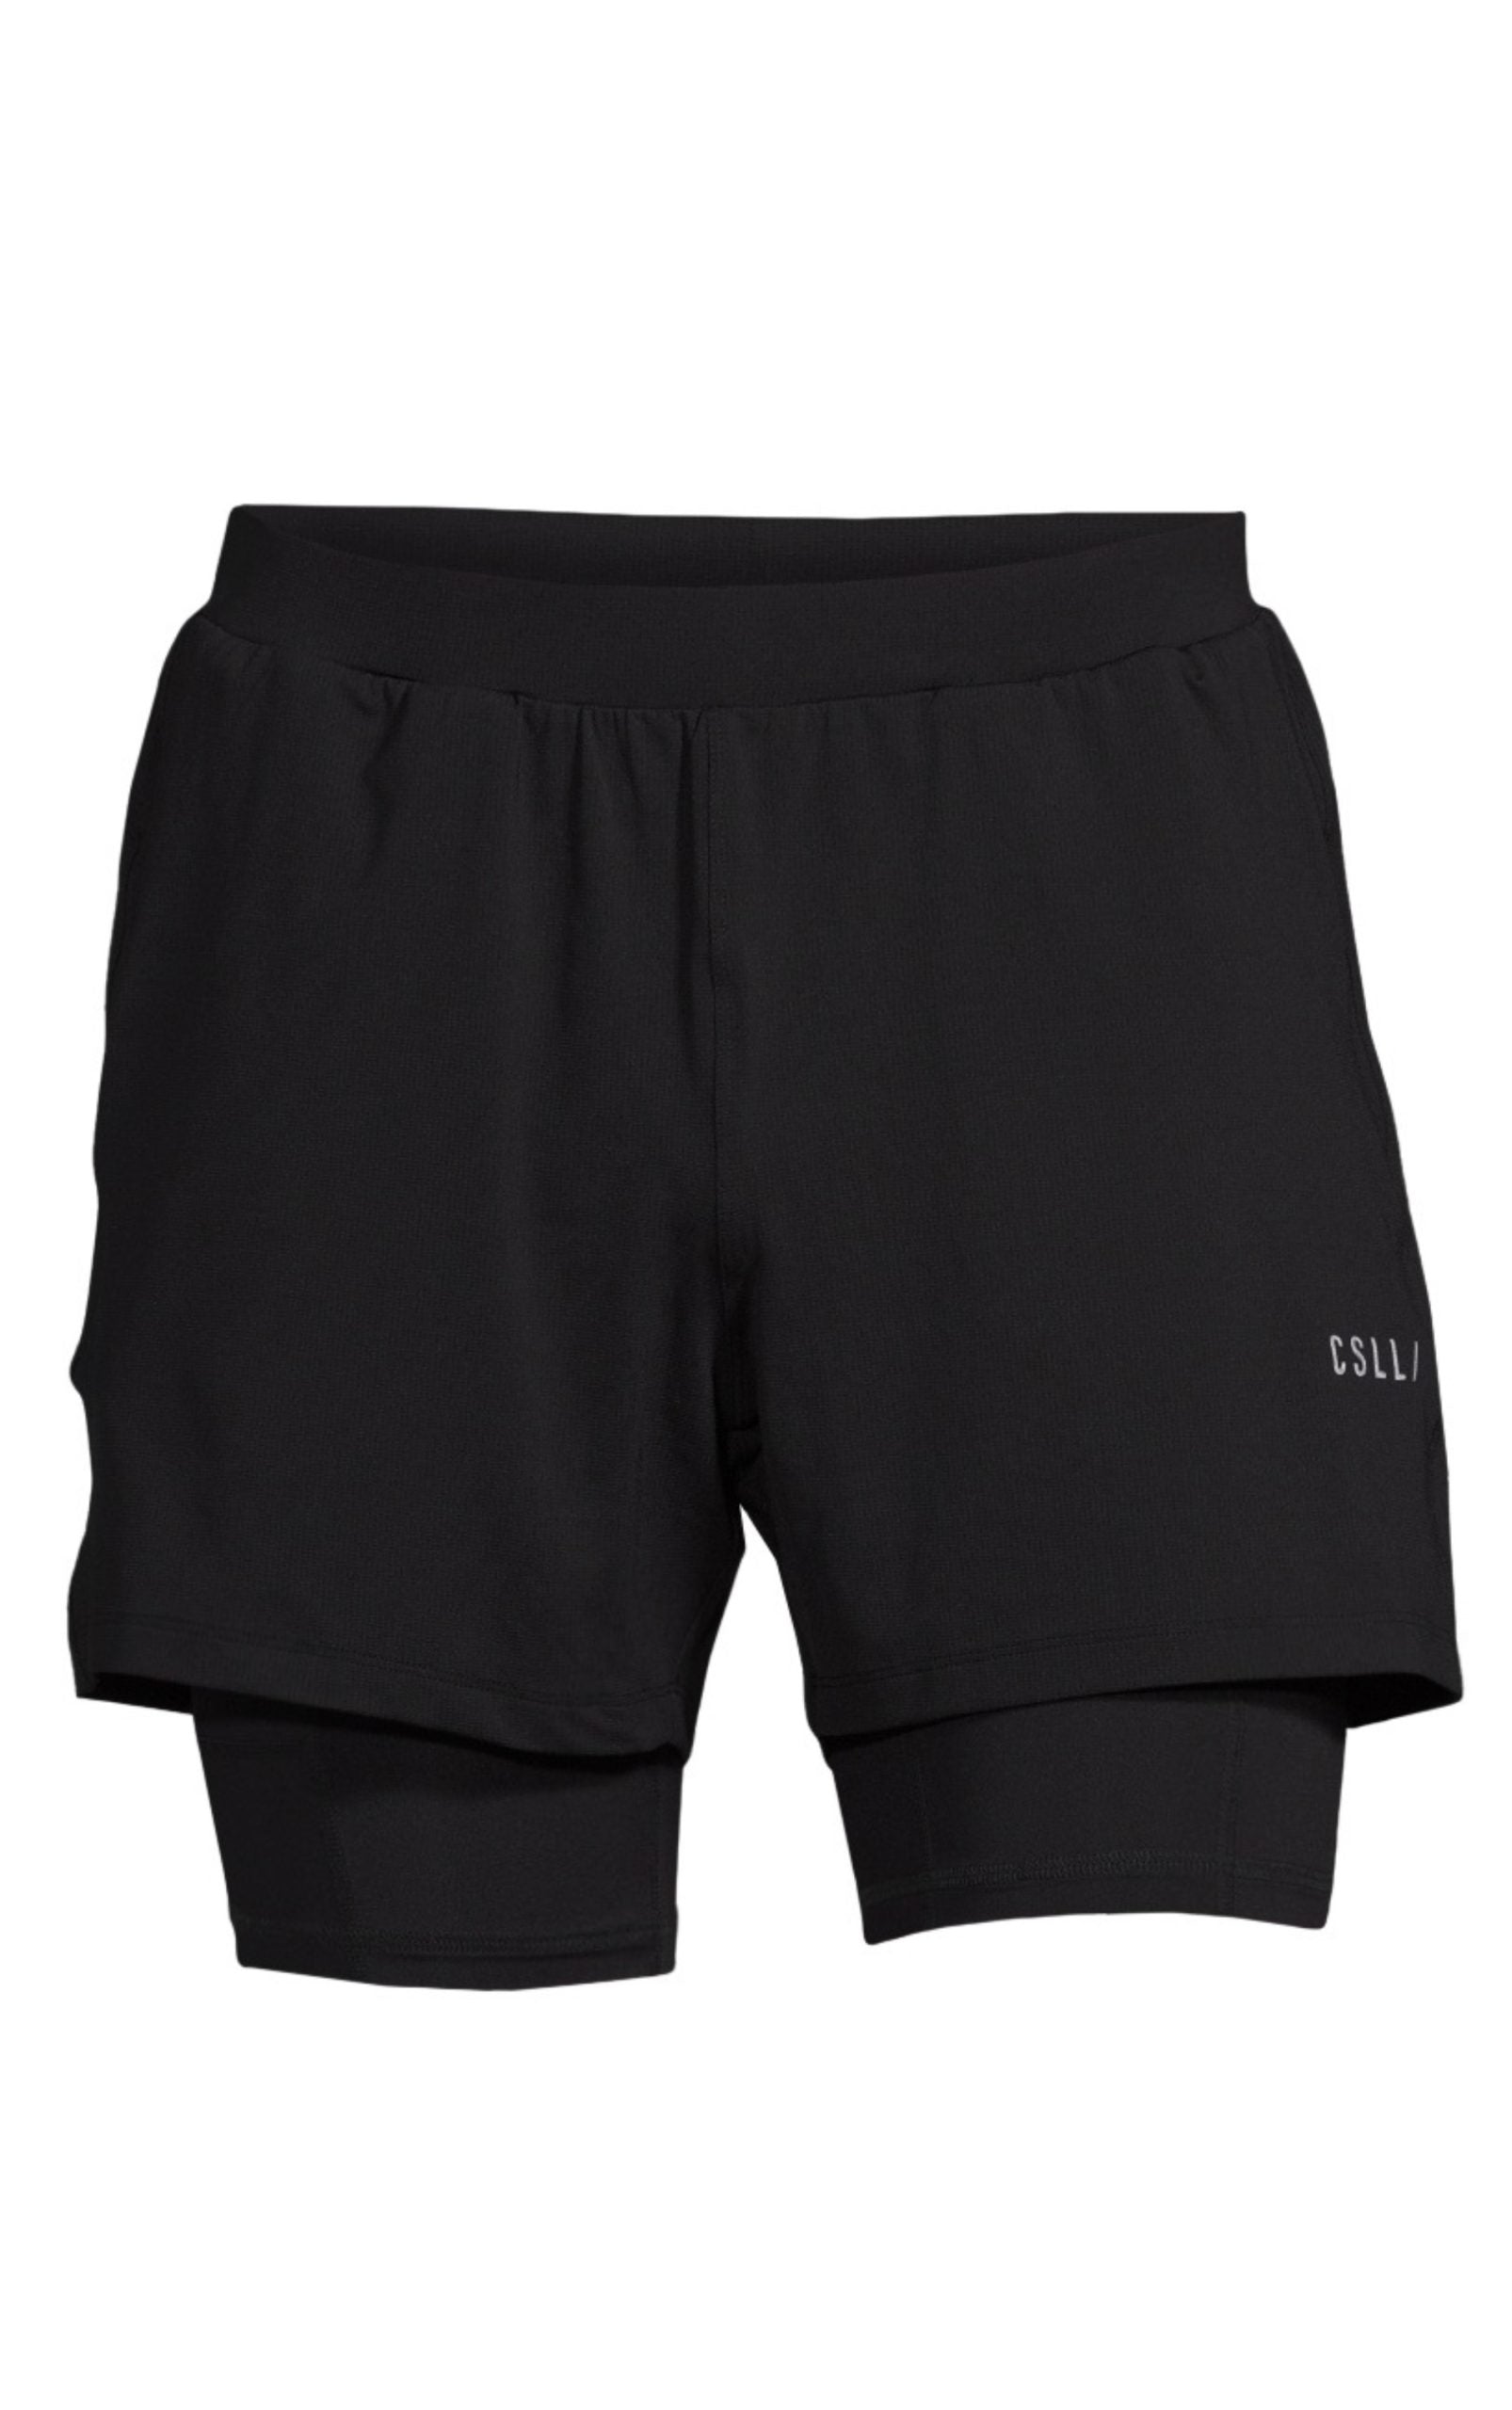 M Double Layer Shorts Black - 19WA50053_1-scaled